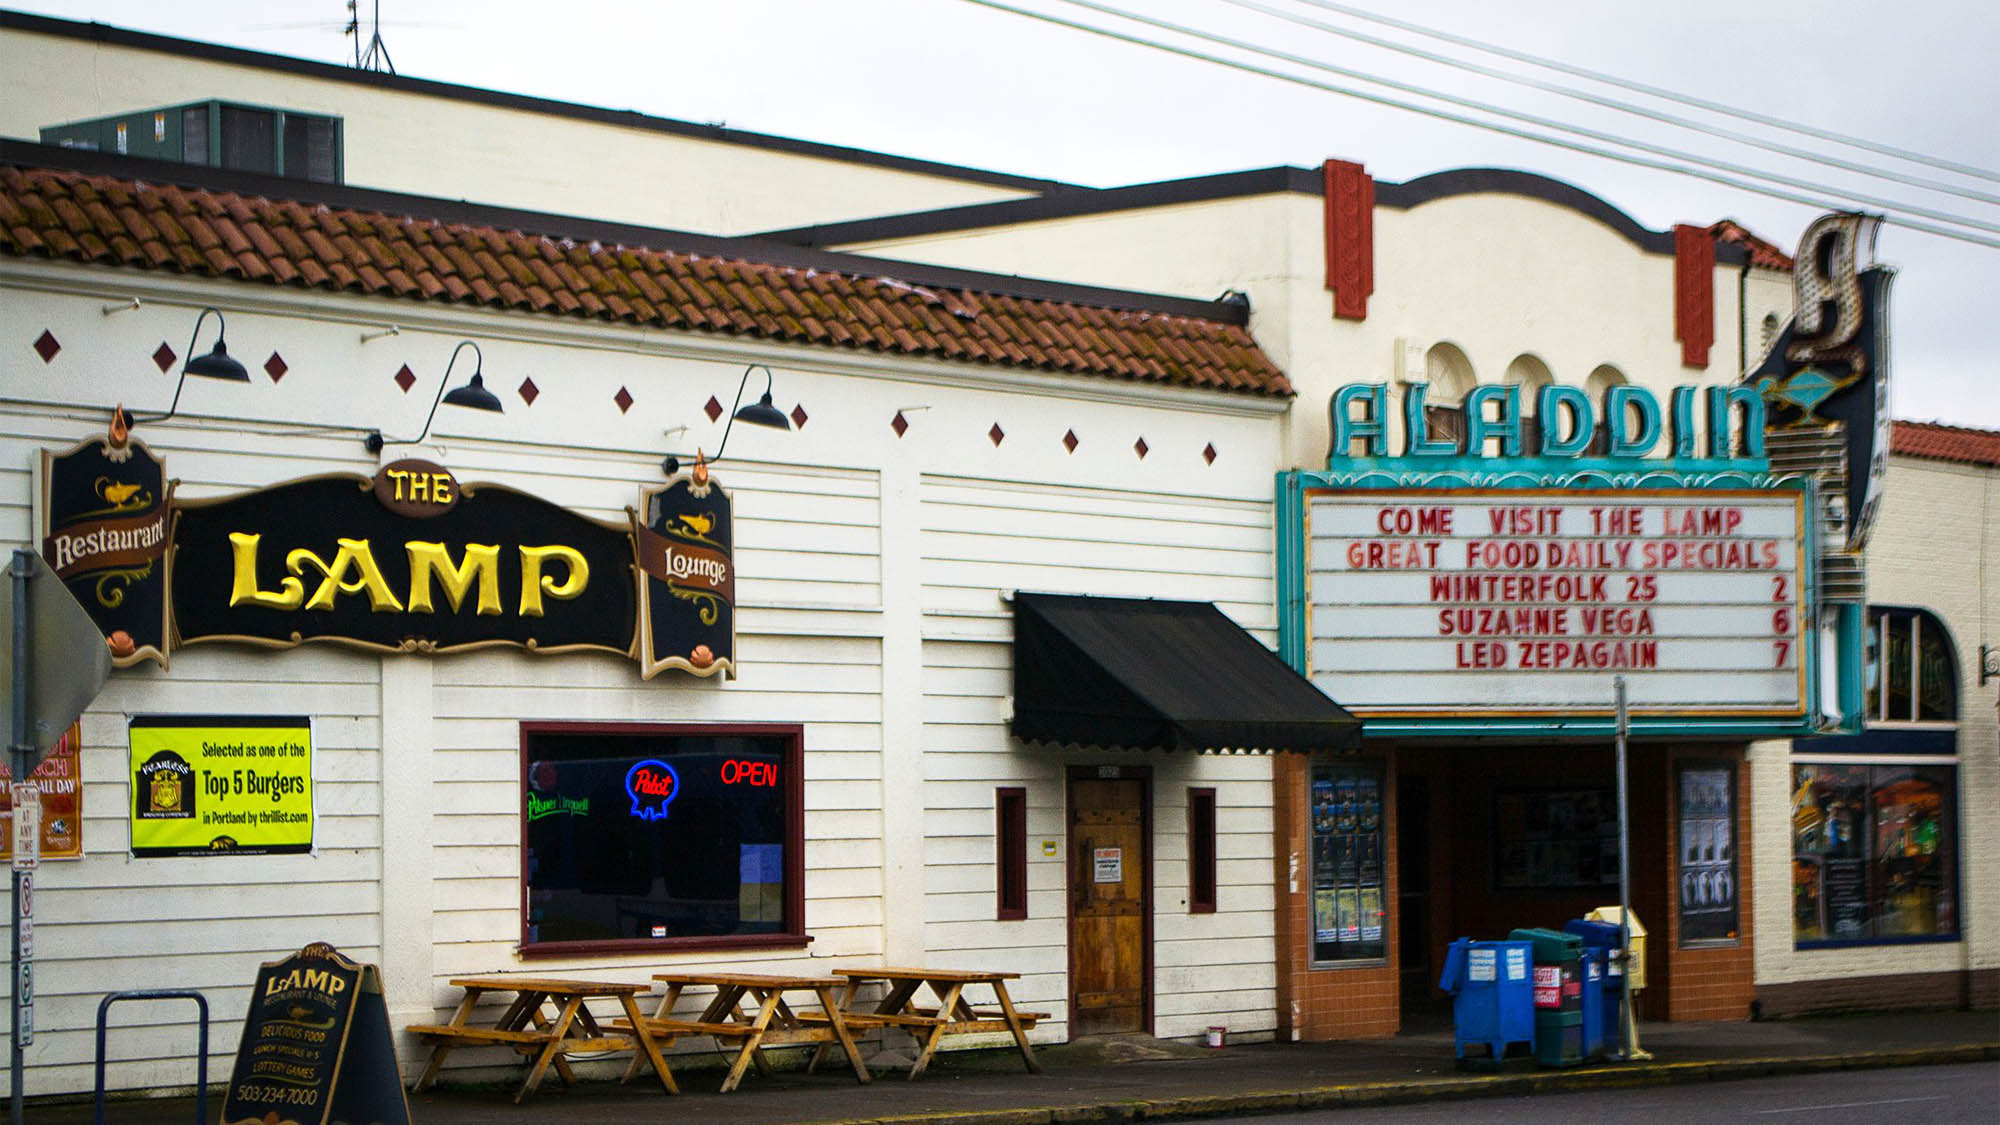 Historic Aladdin theater marquee and nextdor Lamp restaurant exterior 